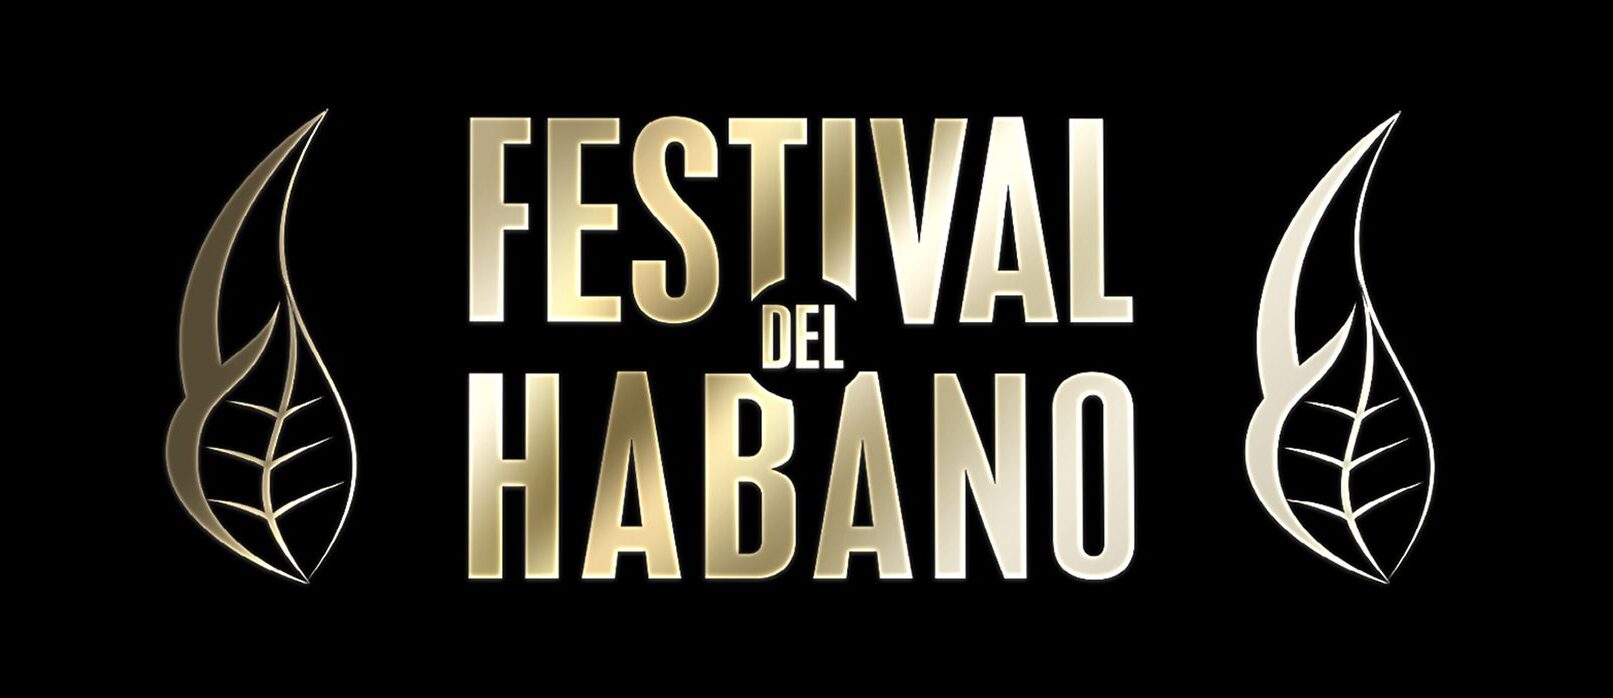 Festival del Habano logo